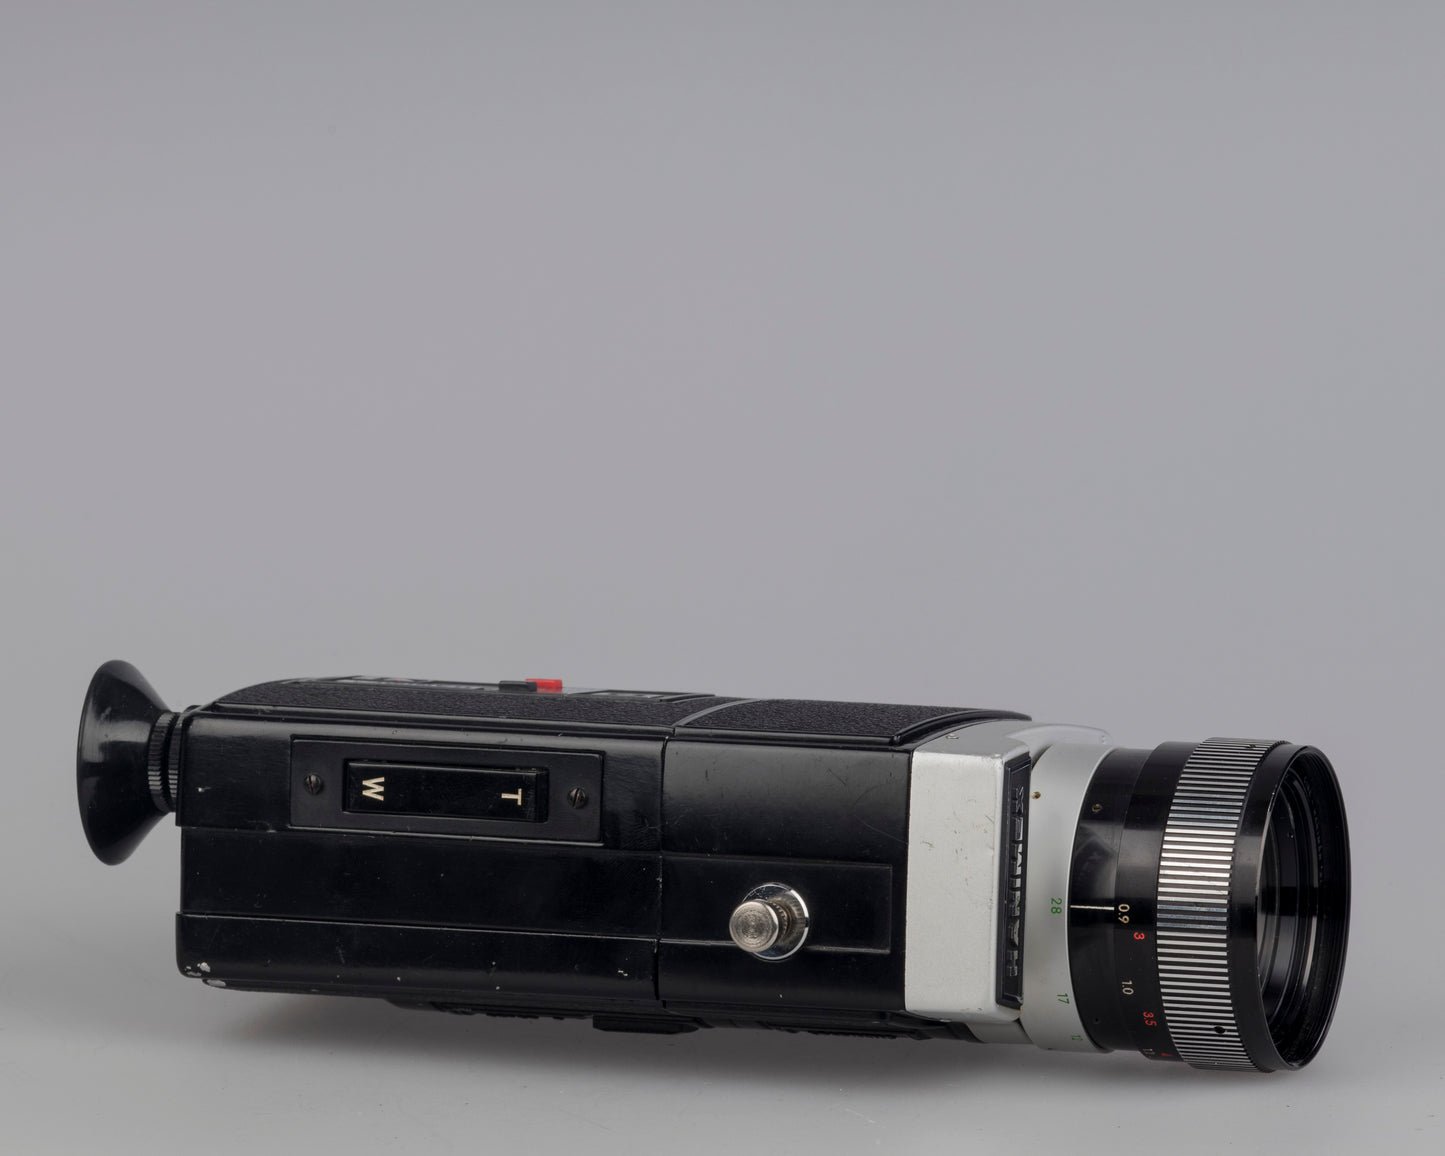 Hanimex MXL 311 Loadmatic super 8 camera